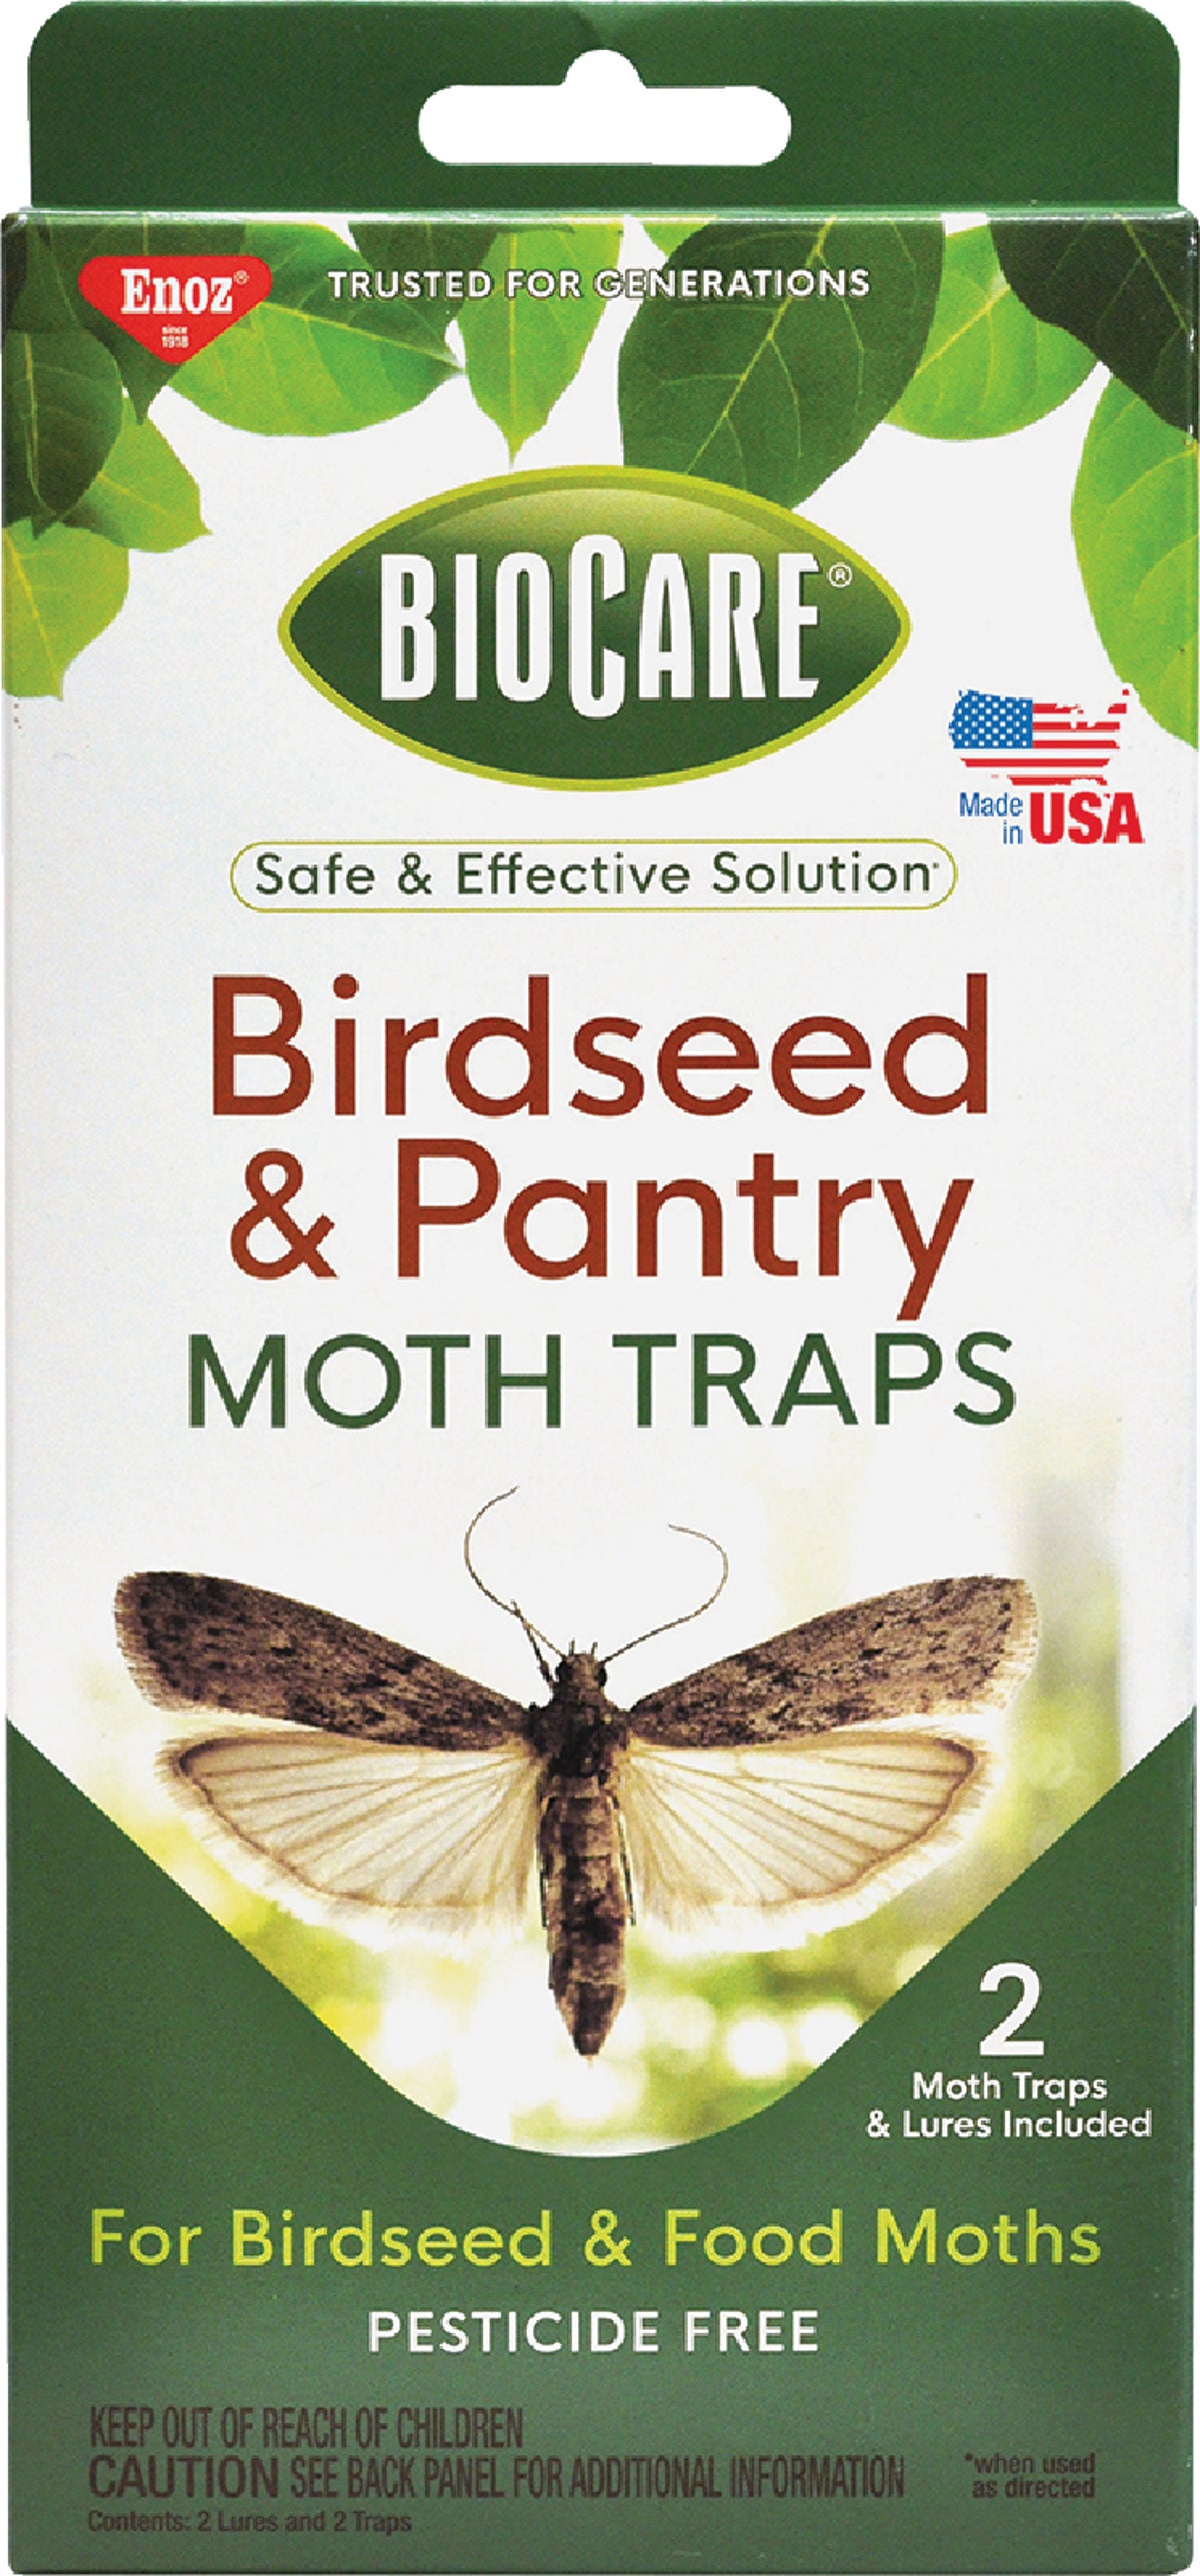 Safer Brand The Pantry Pest Pantry Moth Trap